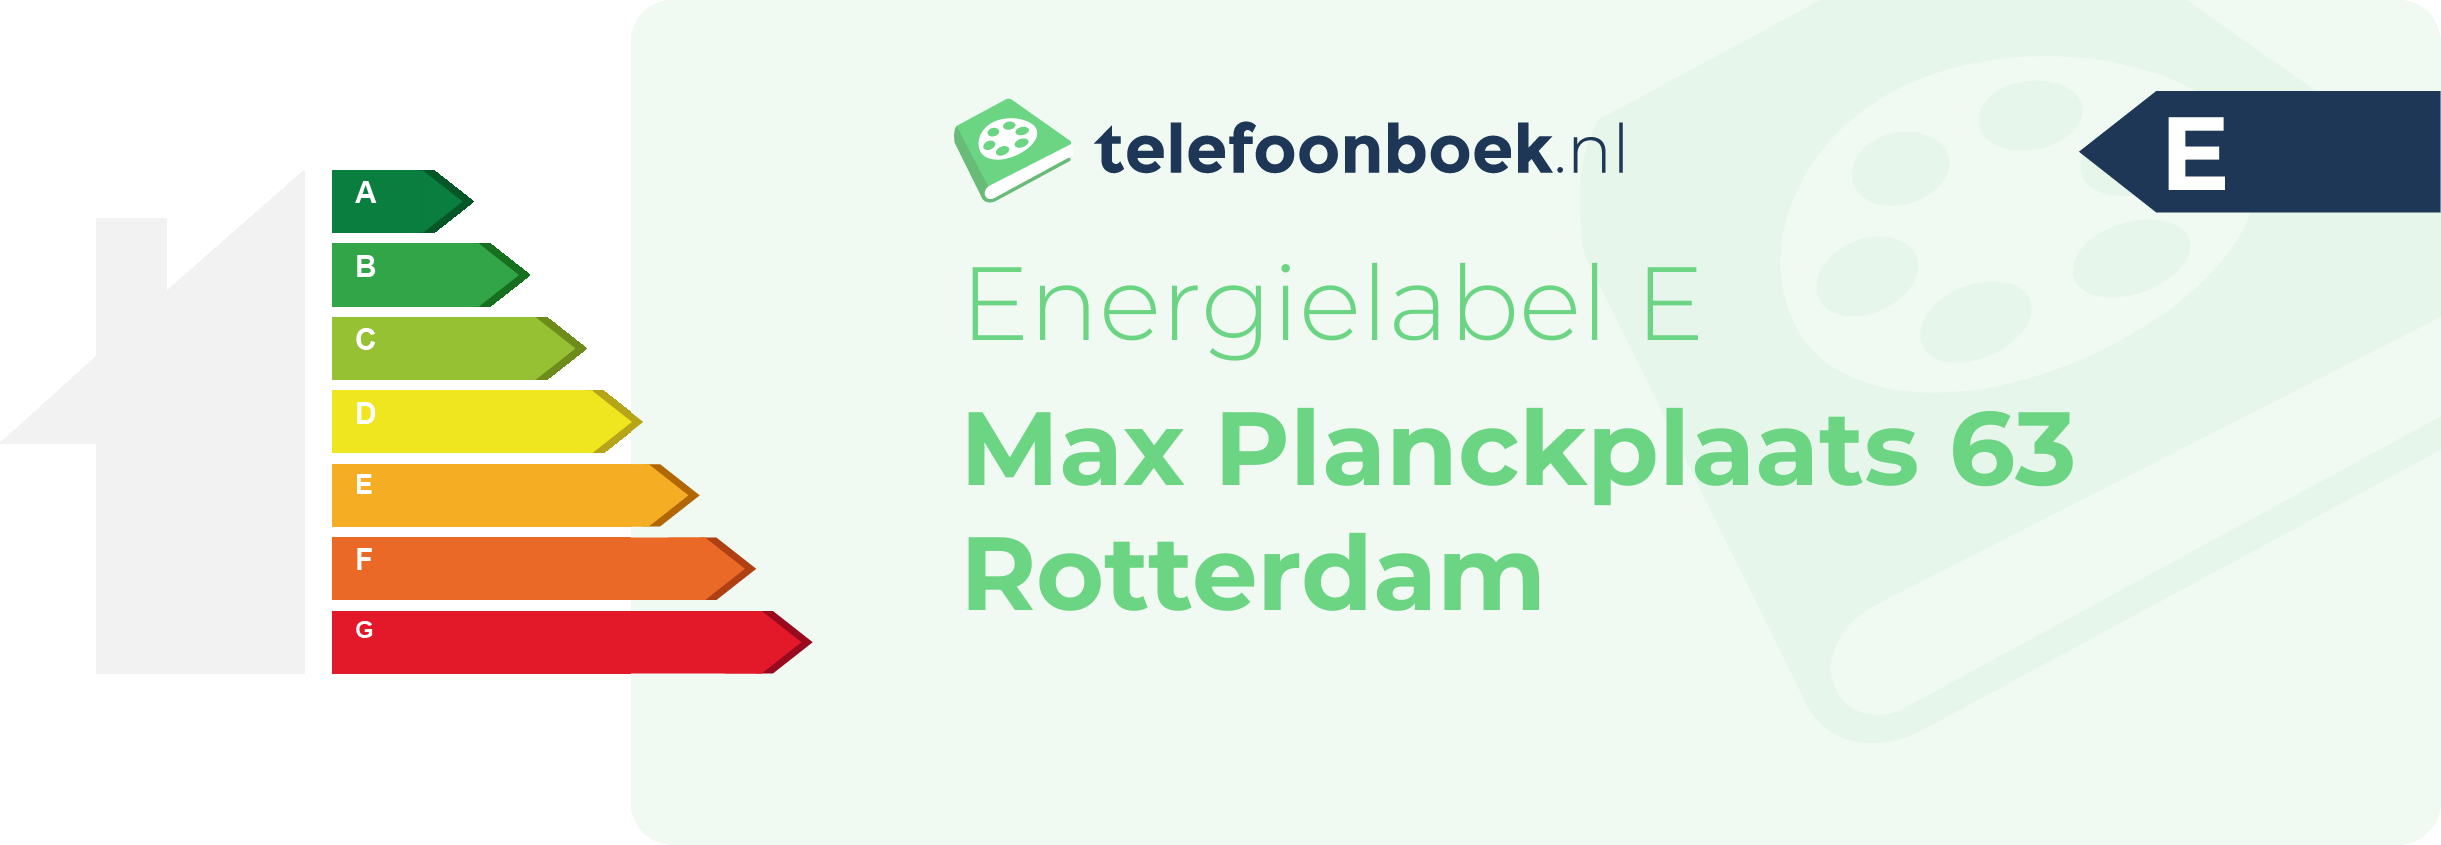 Energielabel Max Planckplaats 63 Rotterdam